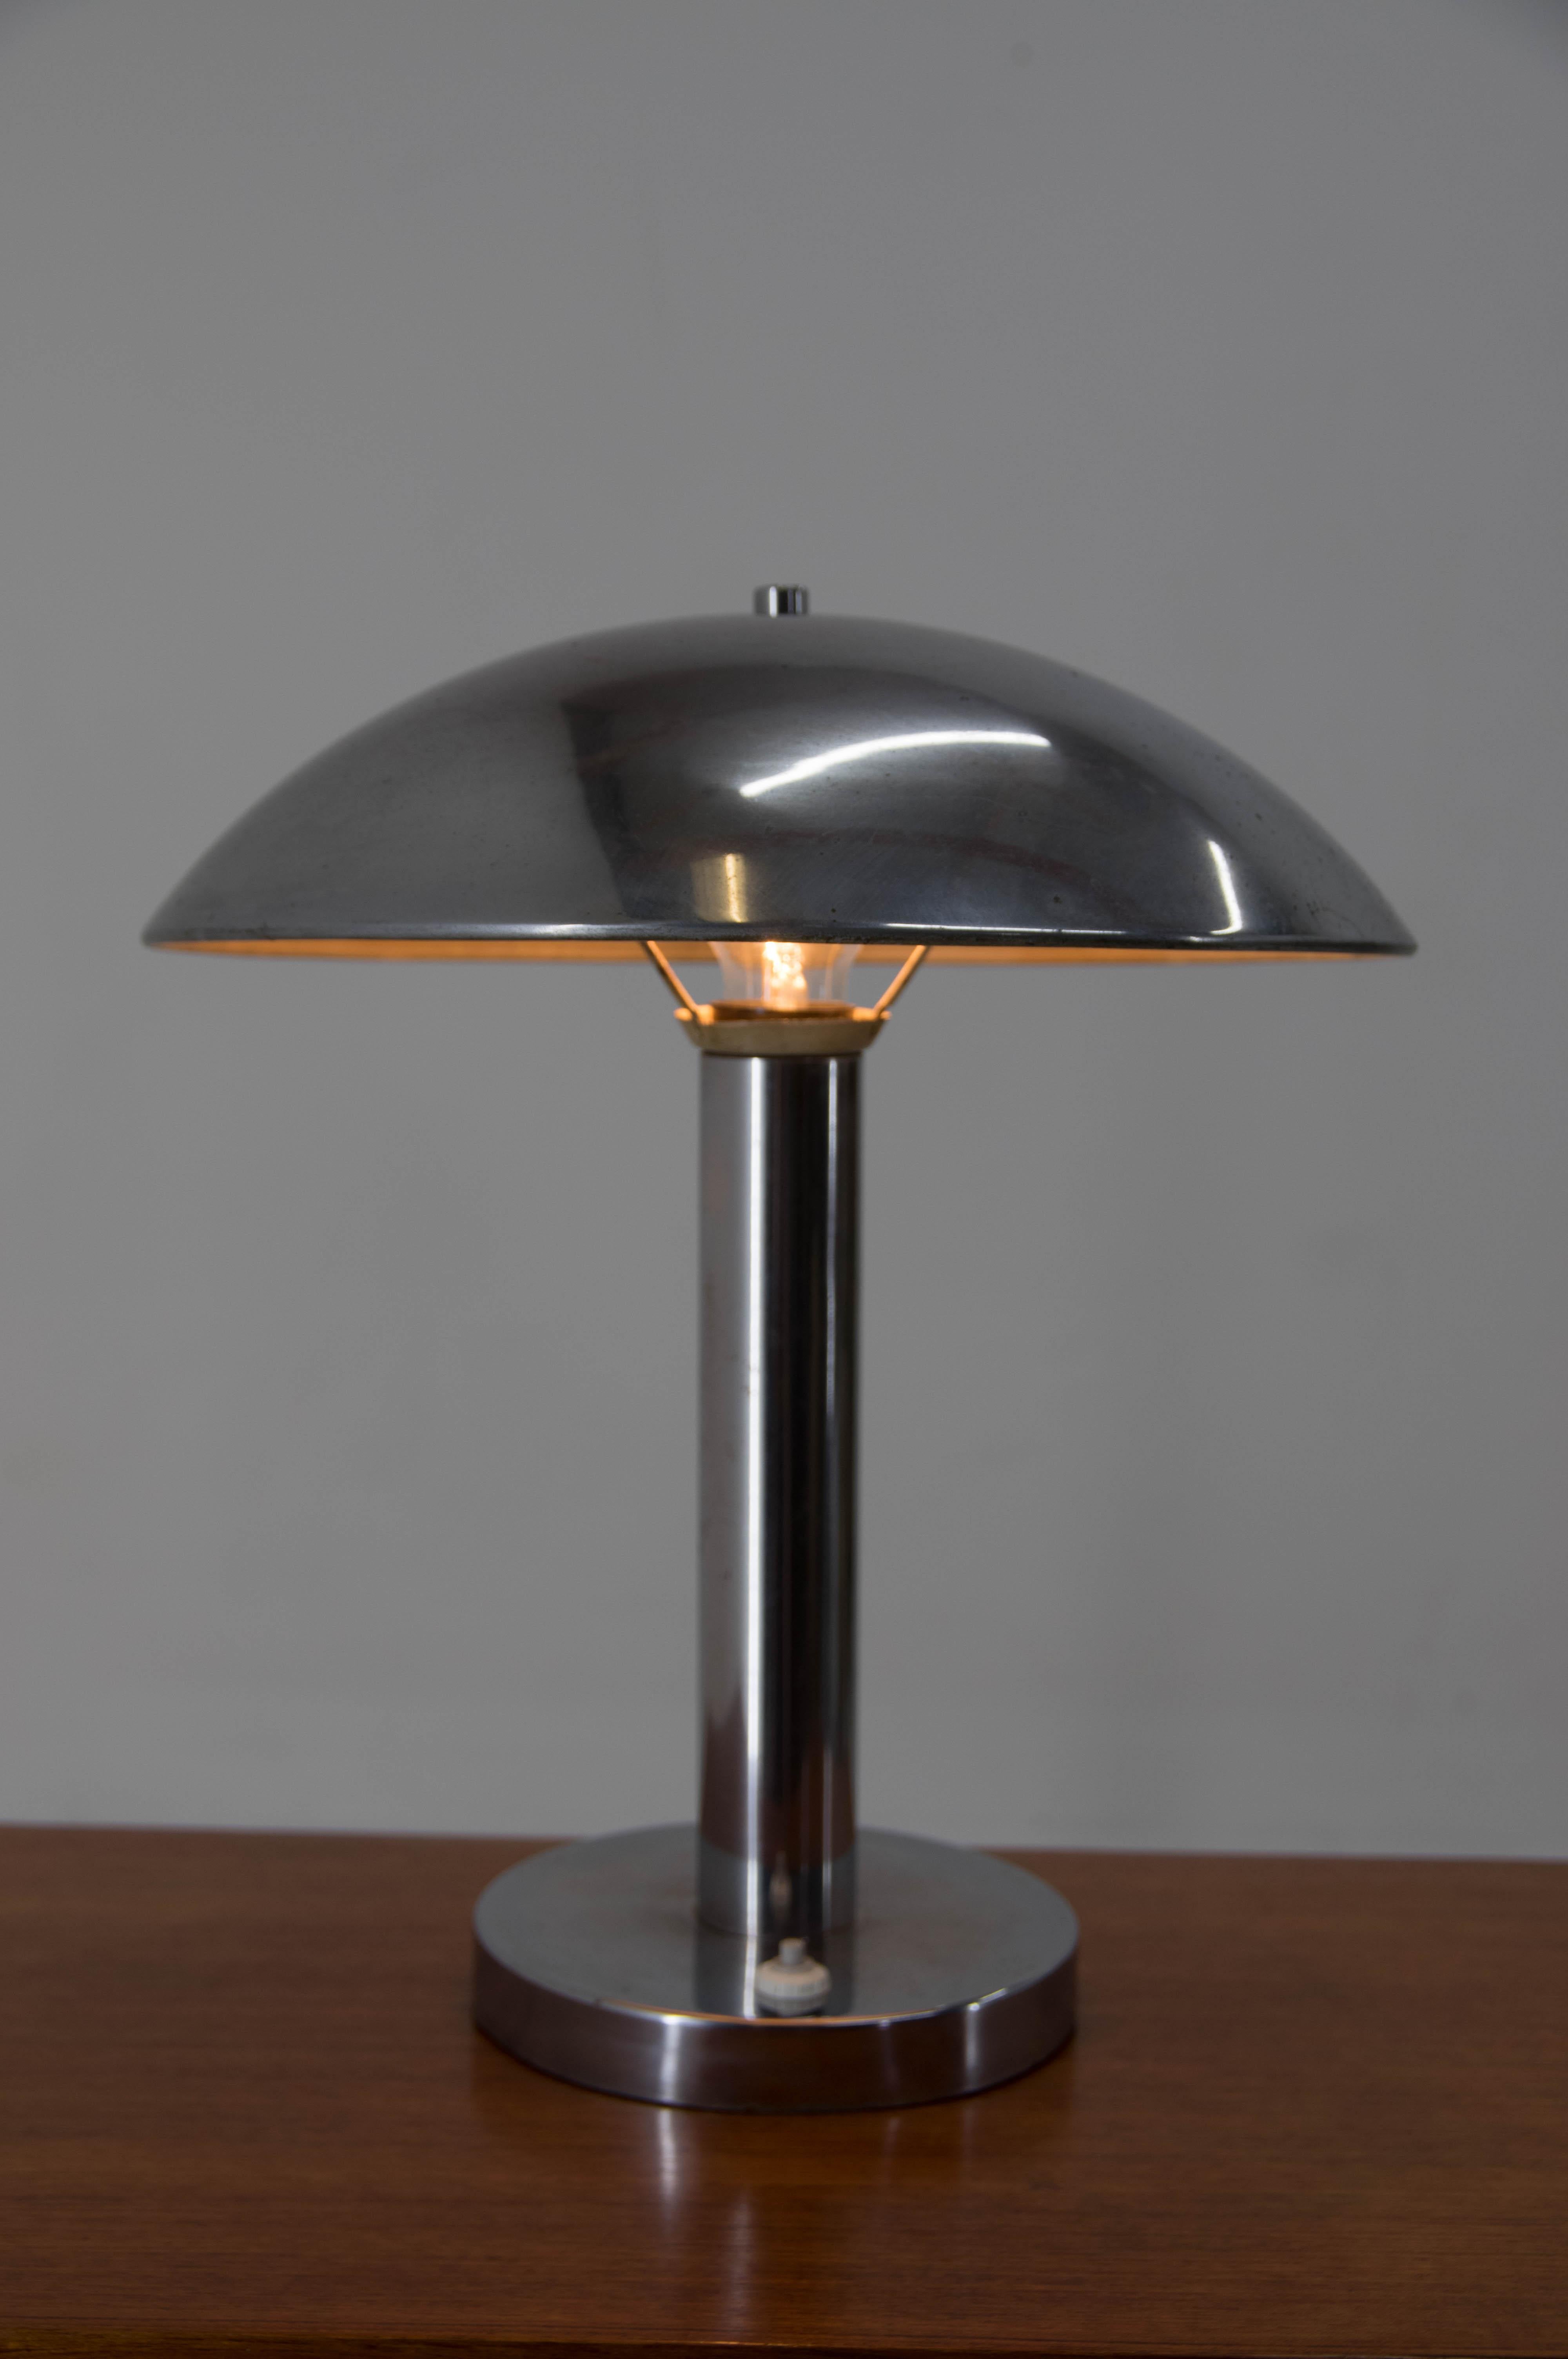 Chrome-plated table lamp by Napako
Chrome with age patina
40W, E25- E27 bulb
Including US plug adapter.